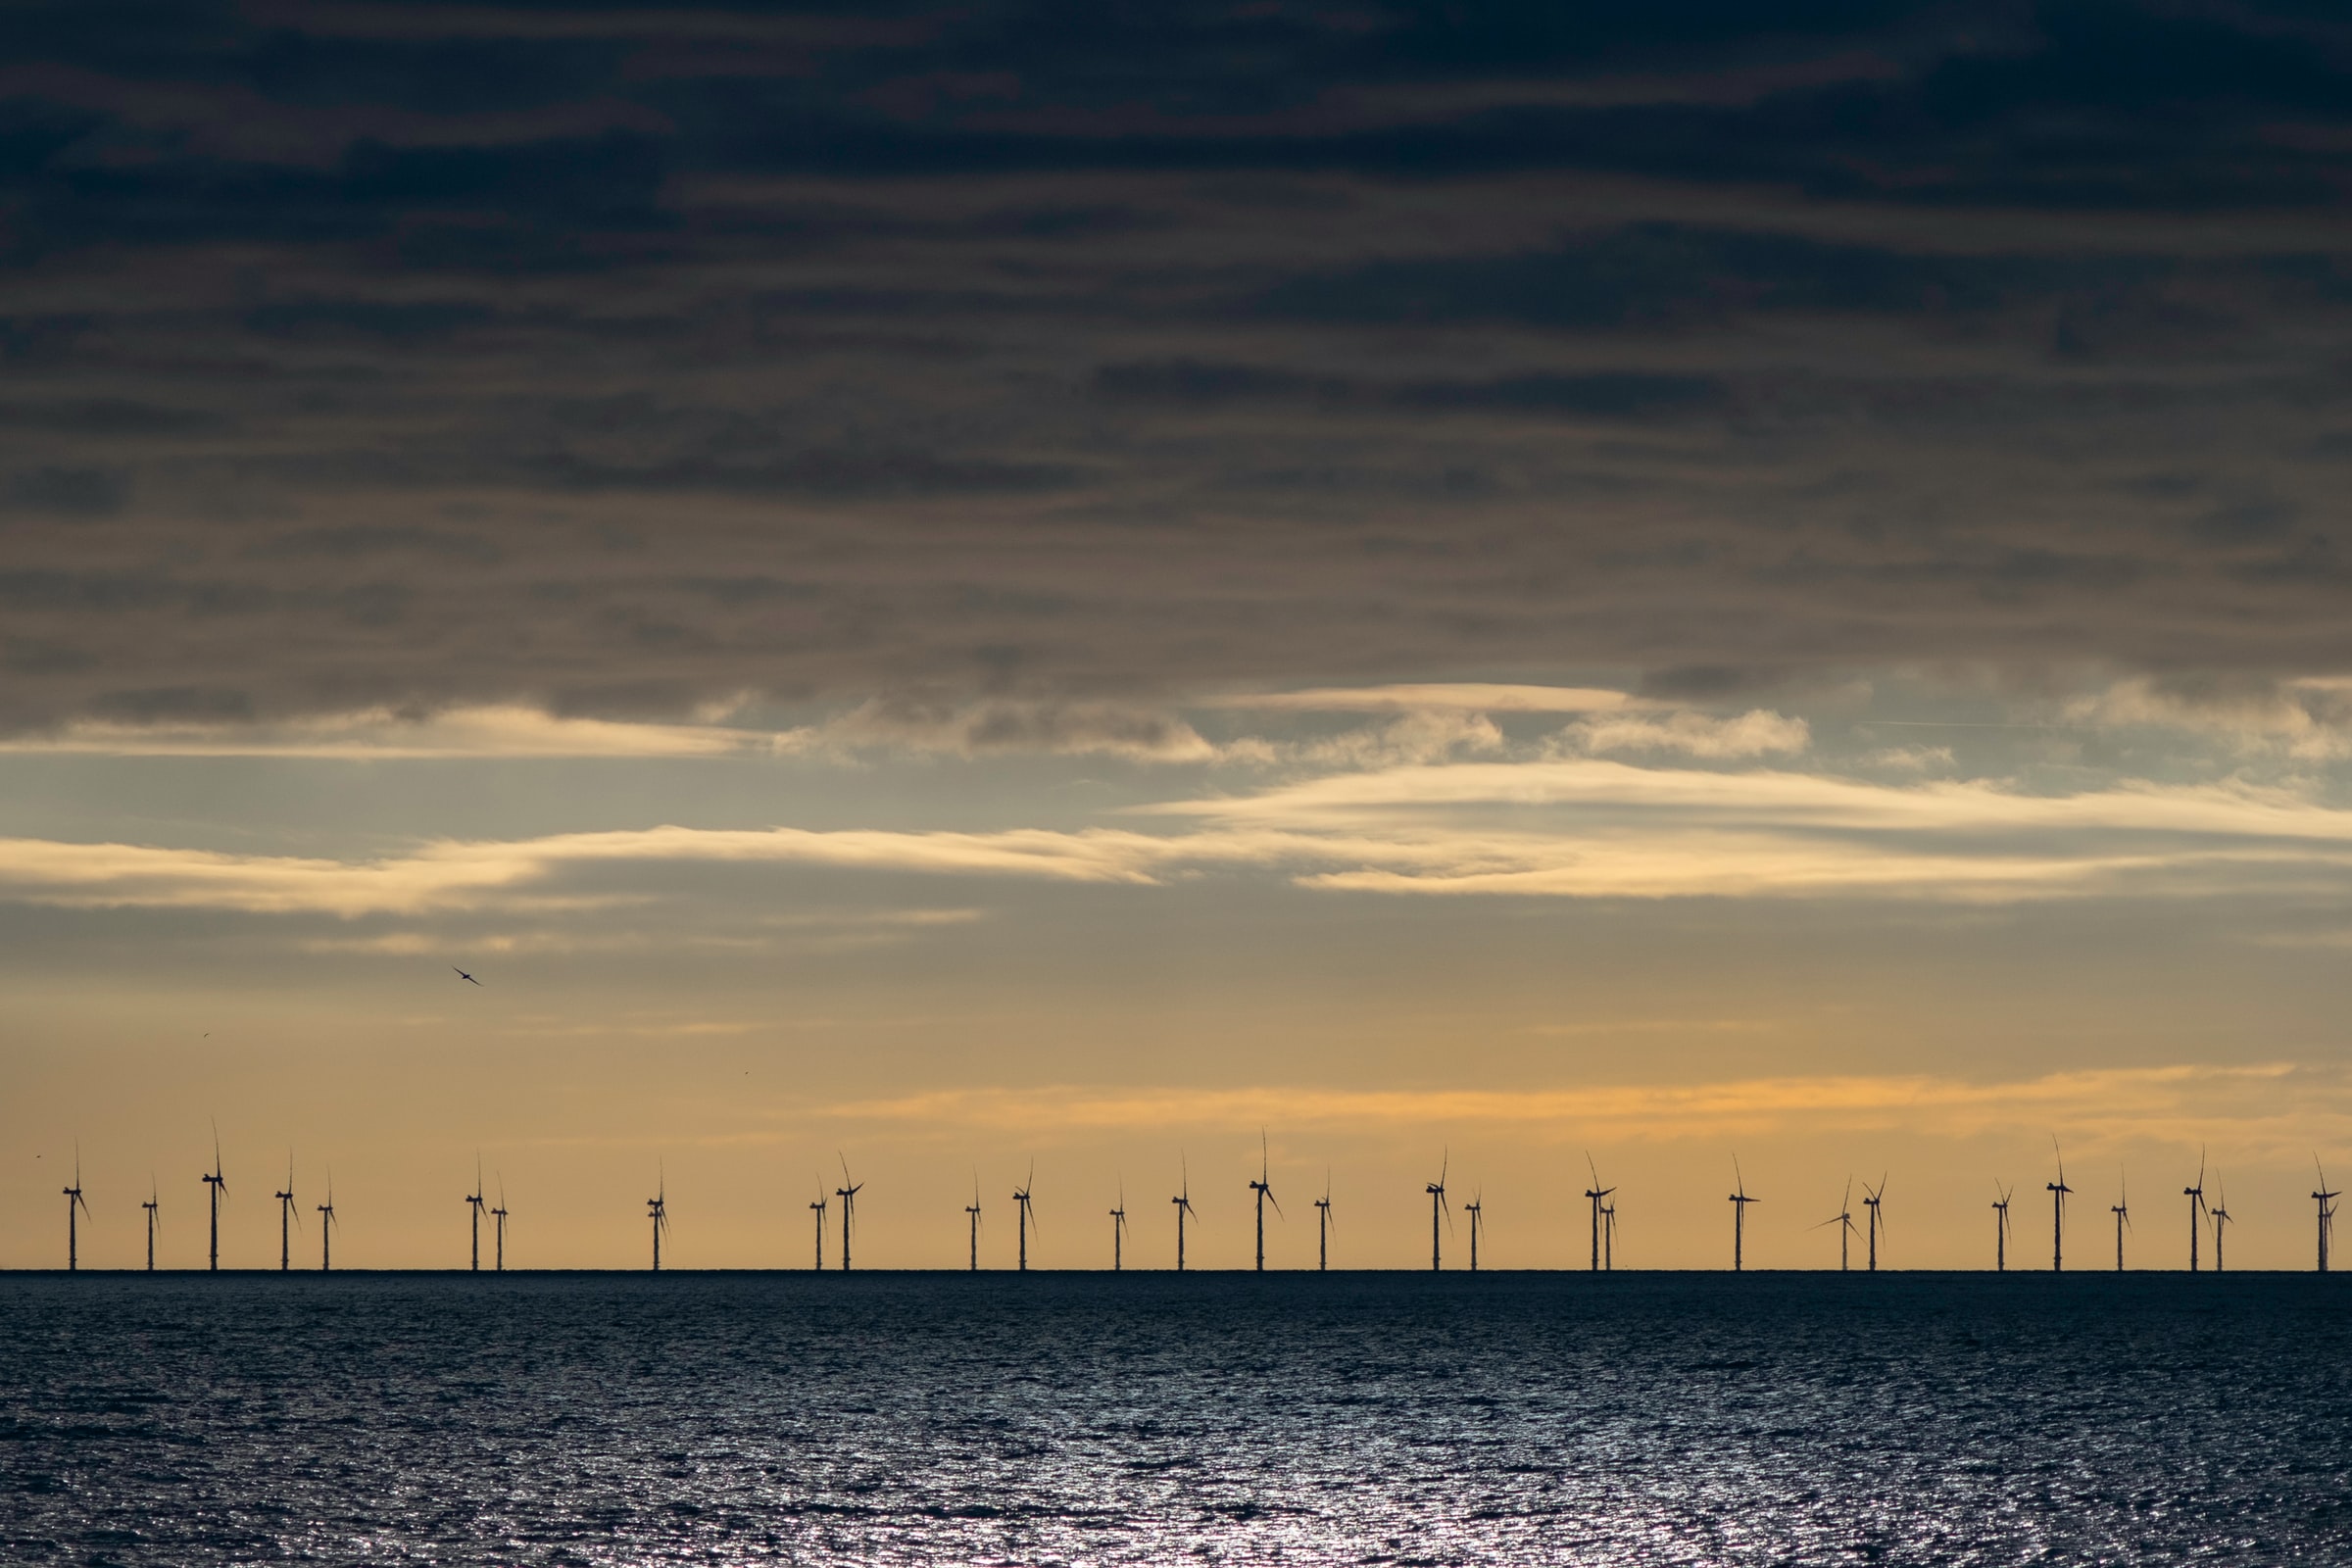 Ocean Energy Europe calls for EU-wide renewable risk mitigation schemes